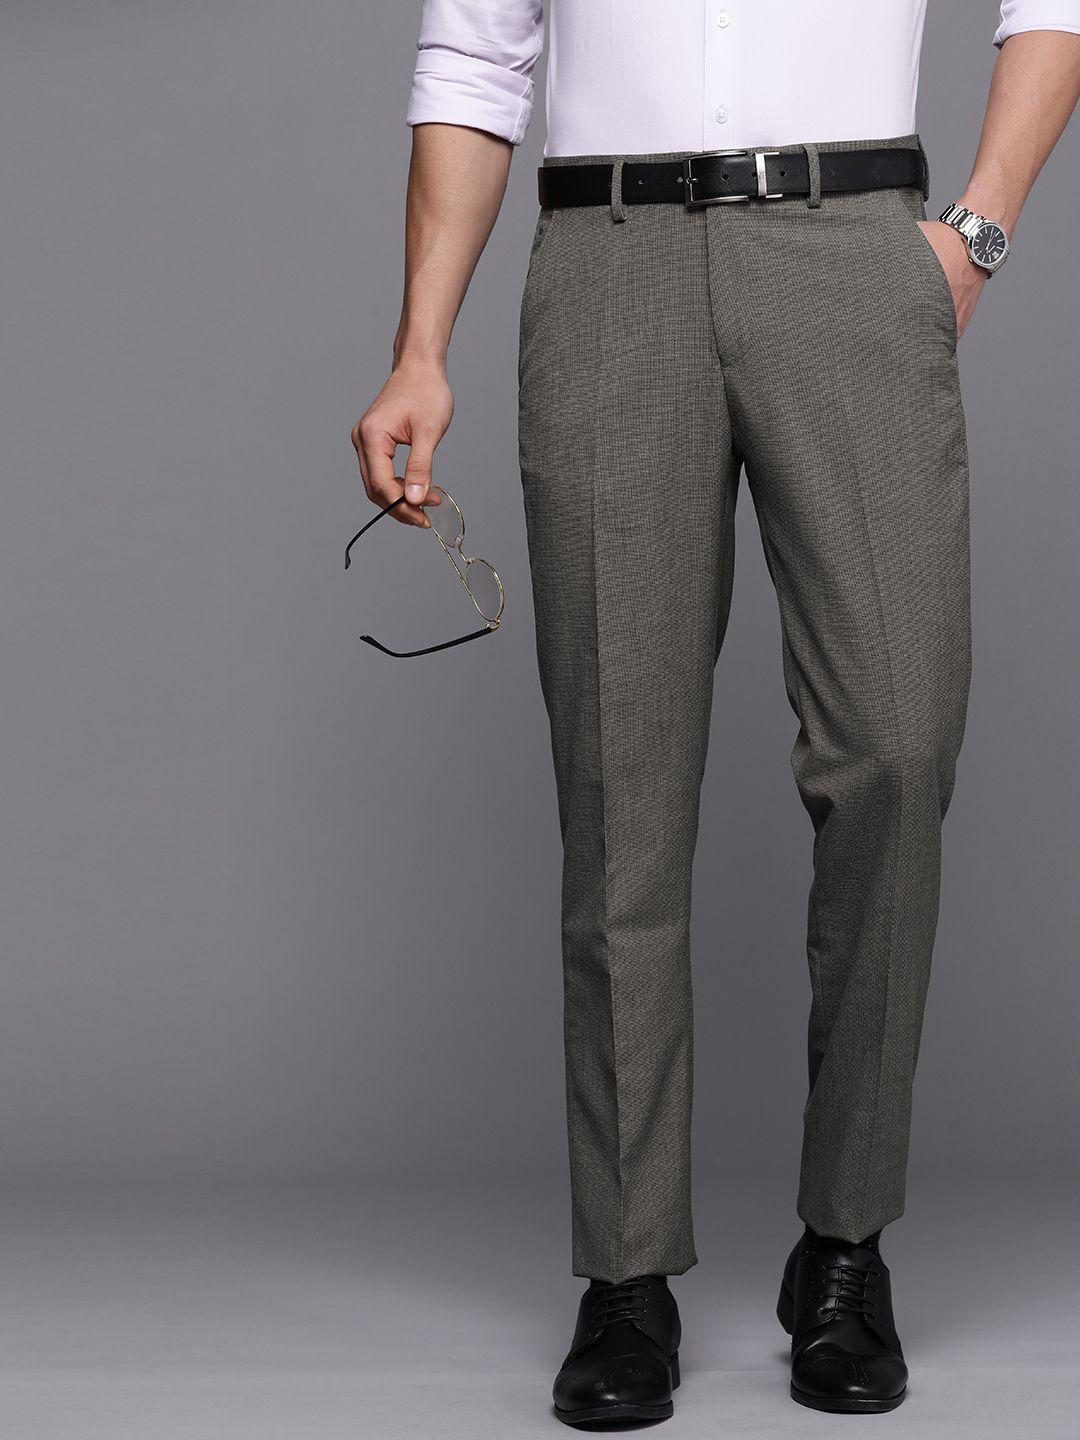 louis philippe men grey slim fit formal trousers